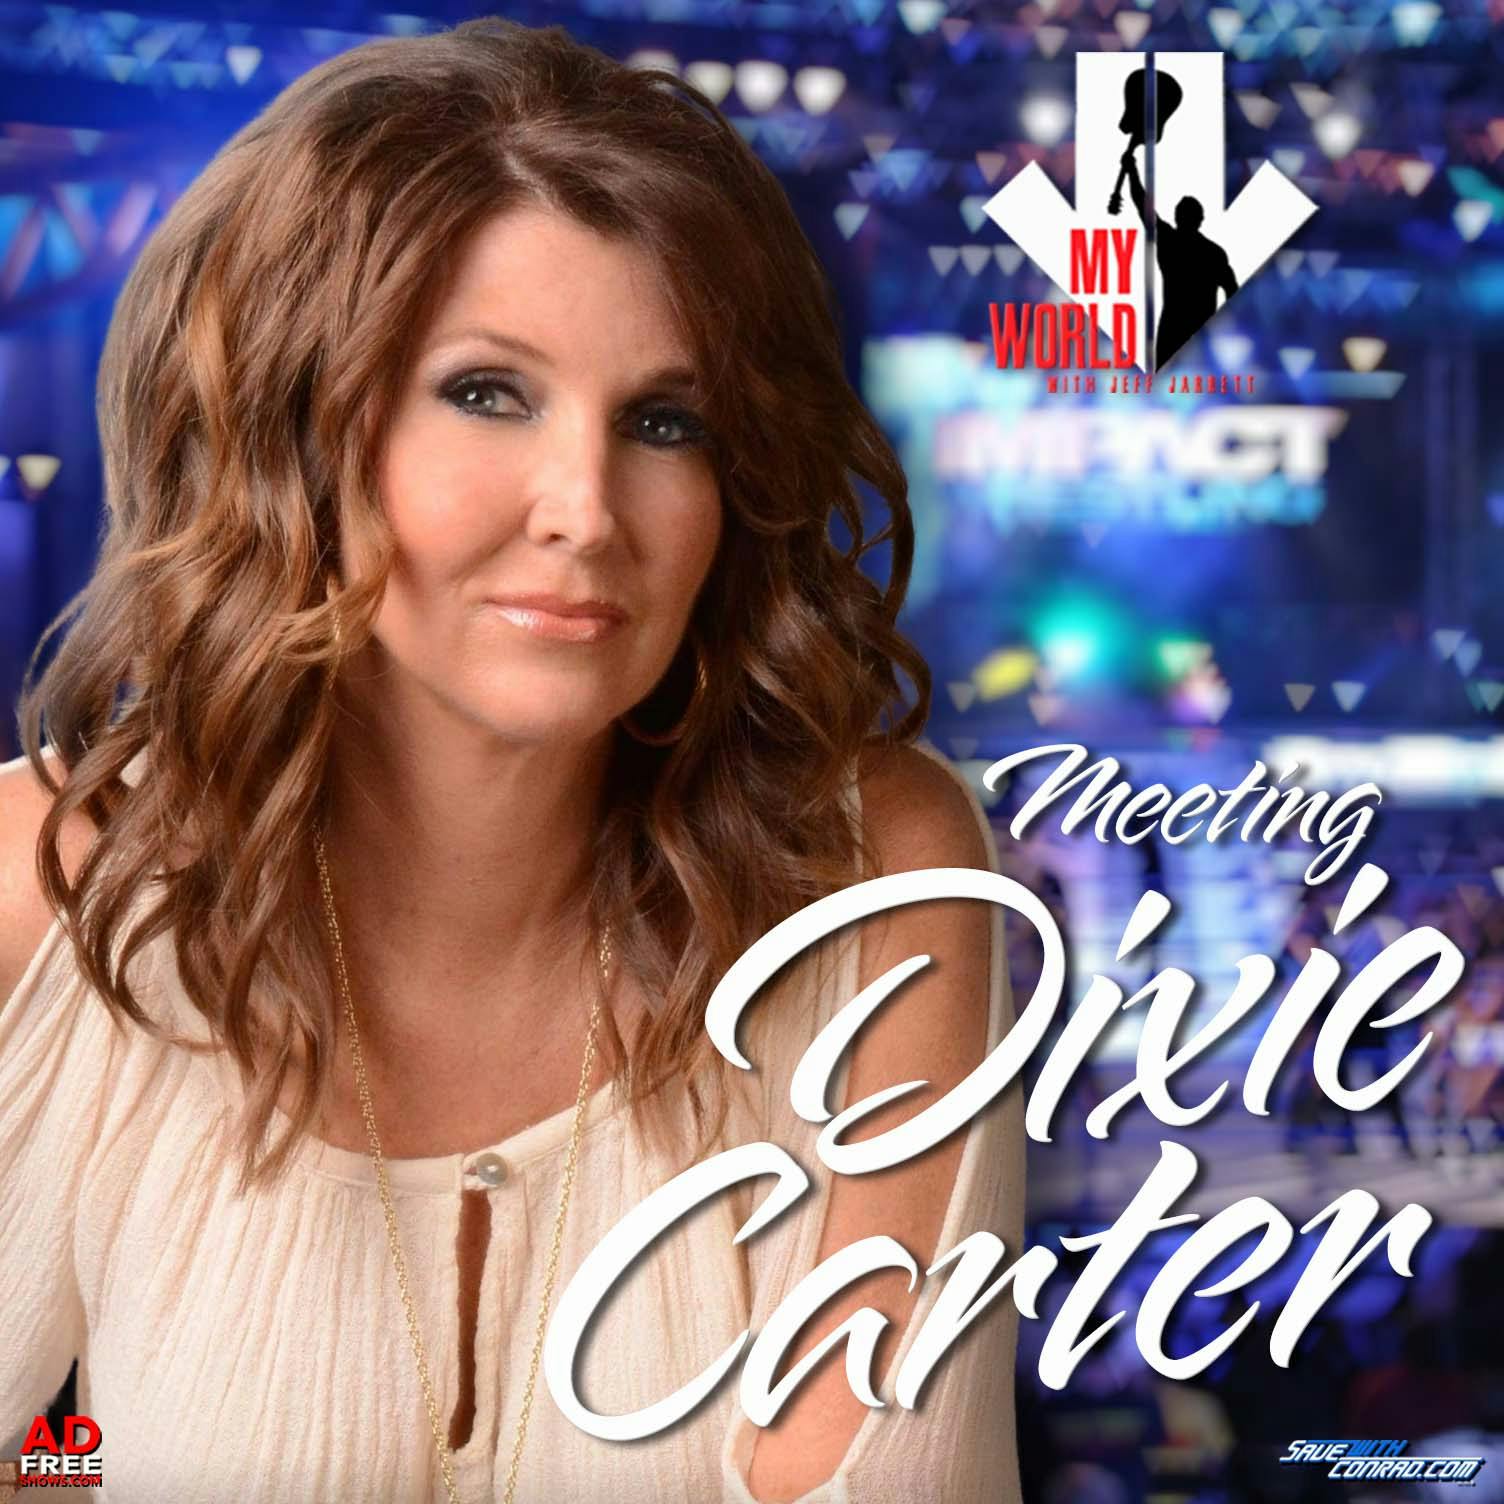 Episode 79: Meeting Dixie Carter